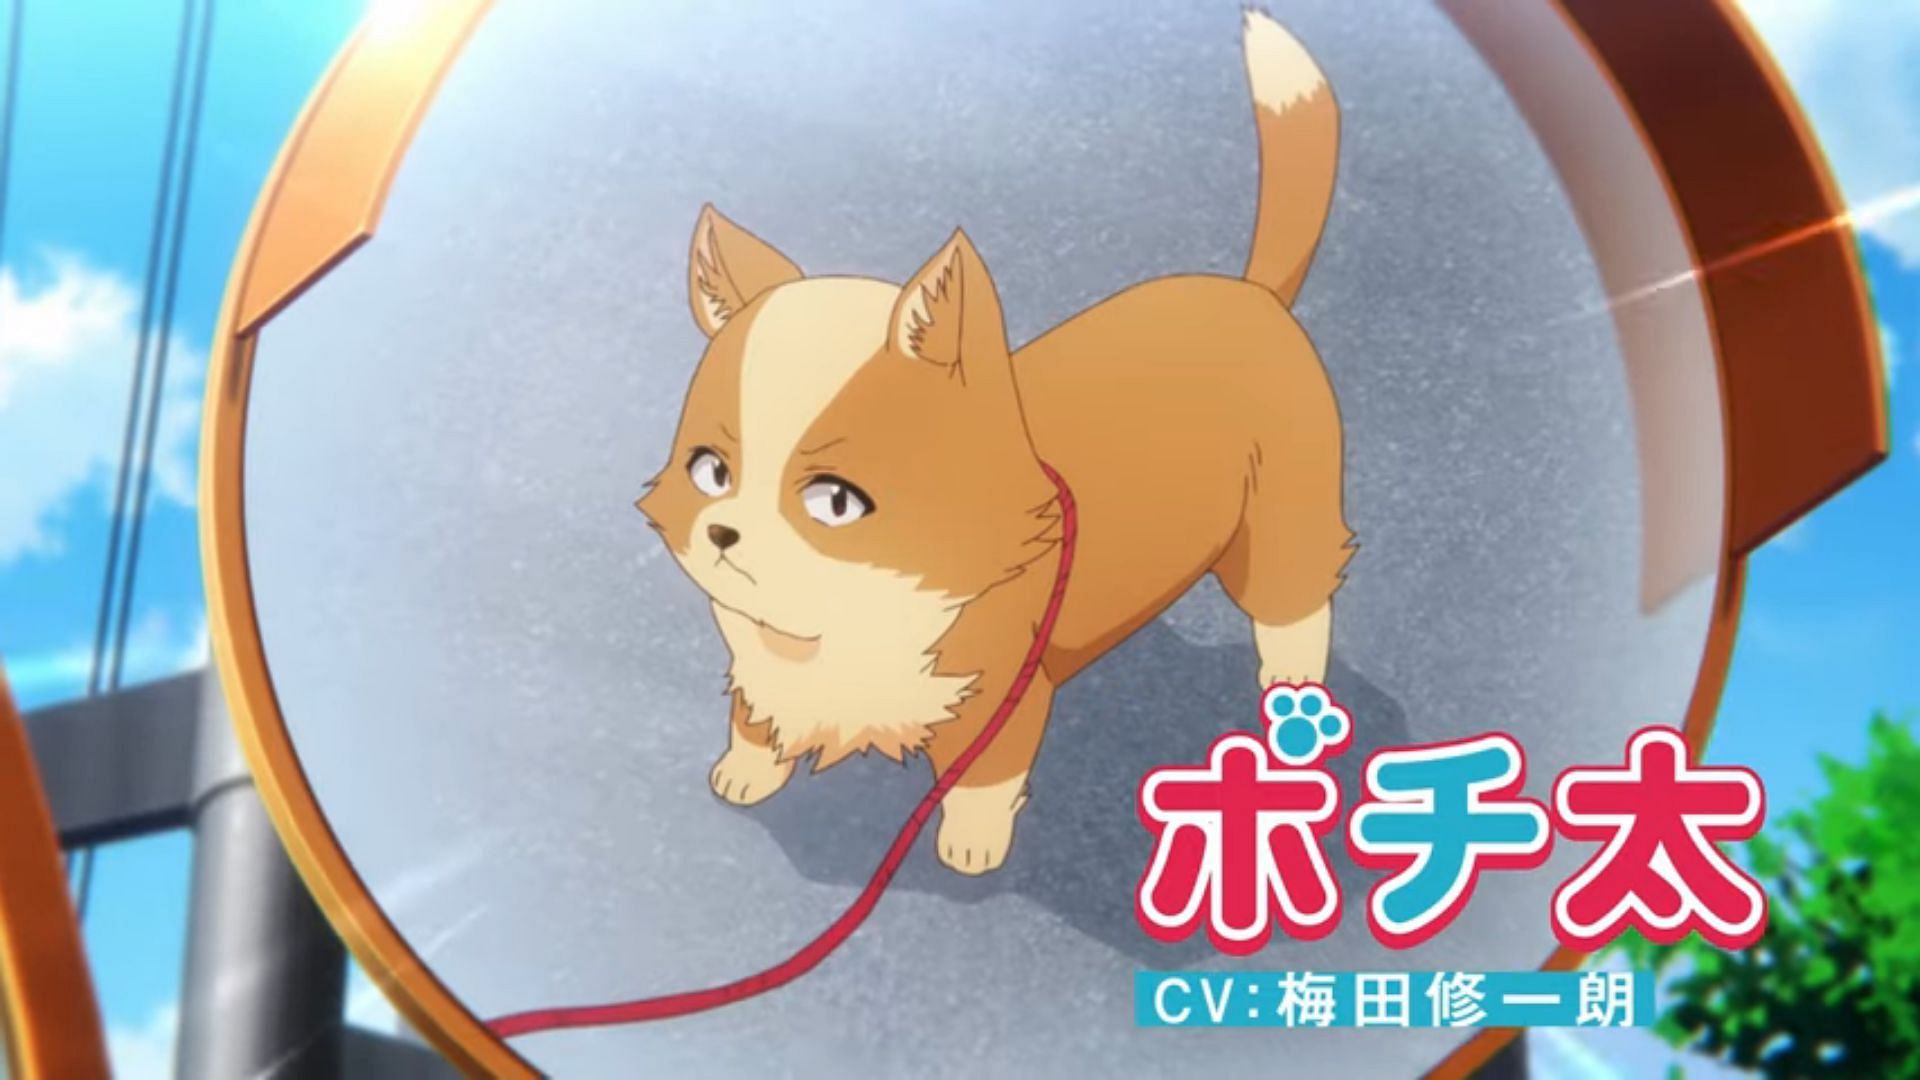 Watch The My Life as Inukaisans Dog Anime January 5 on HIDIVE